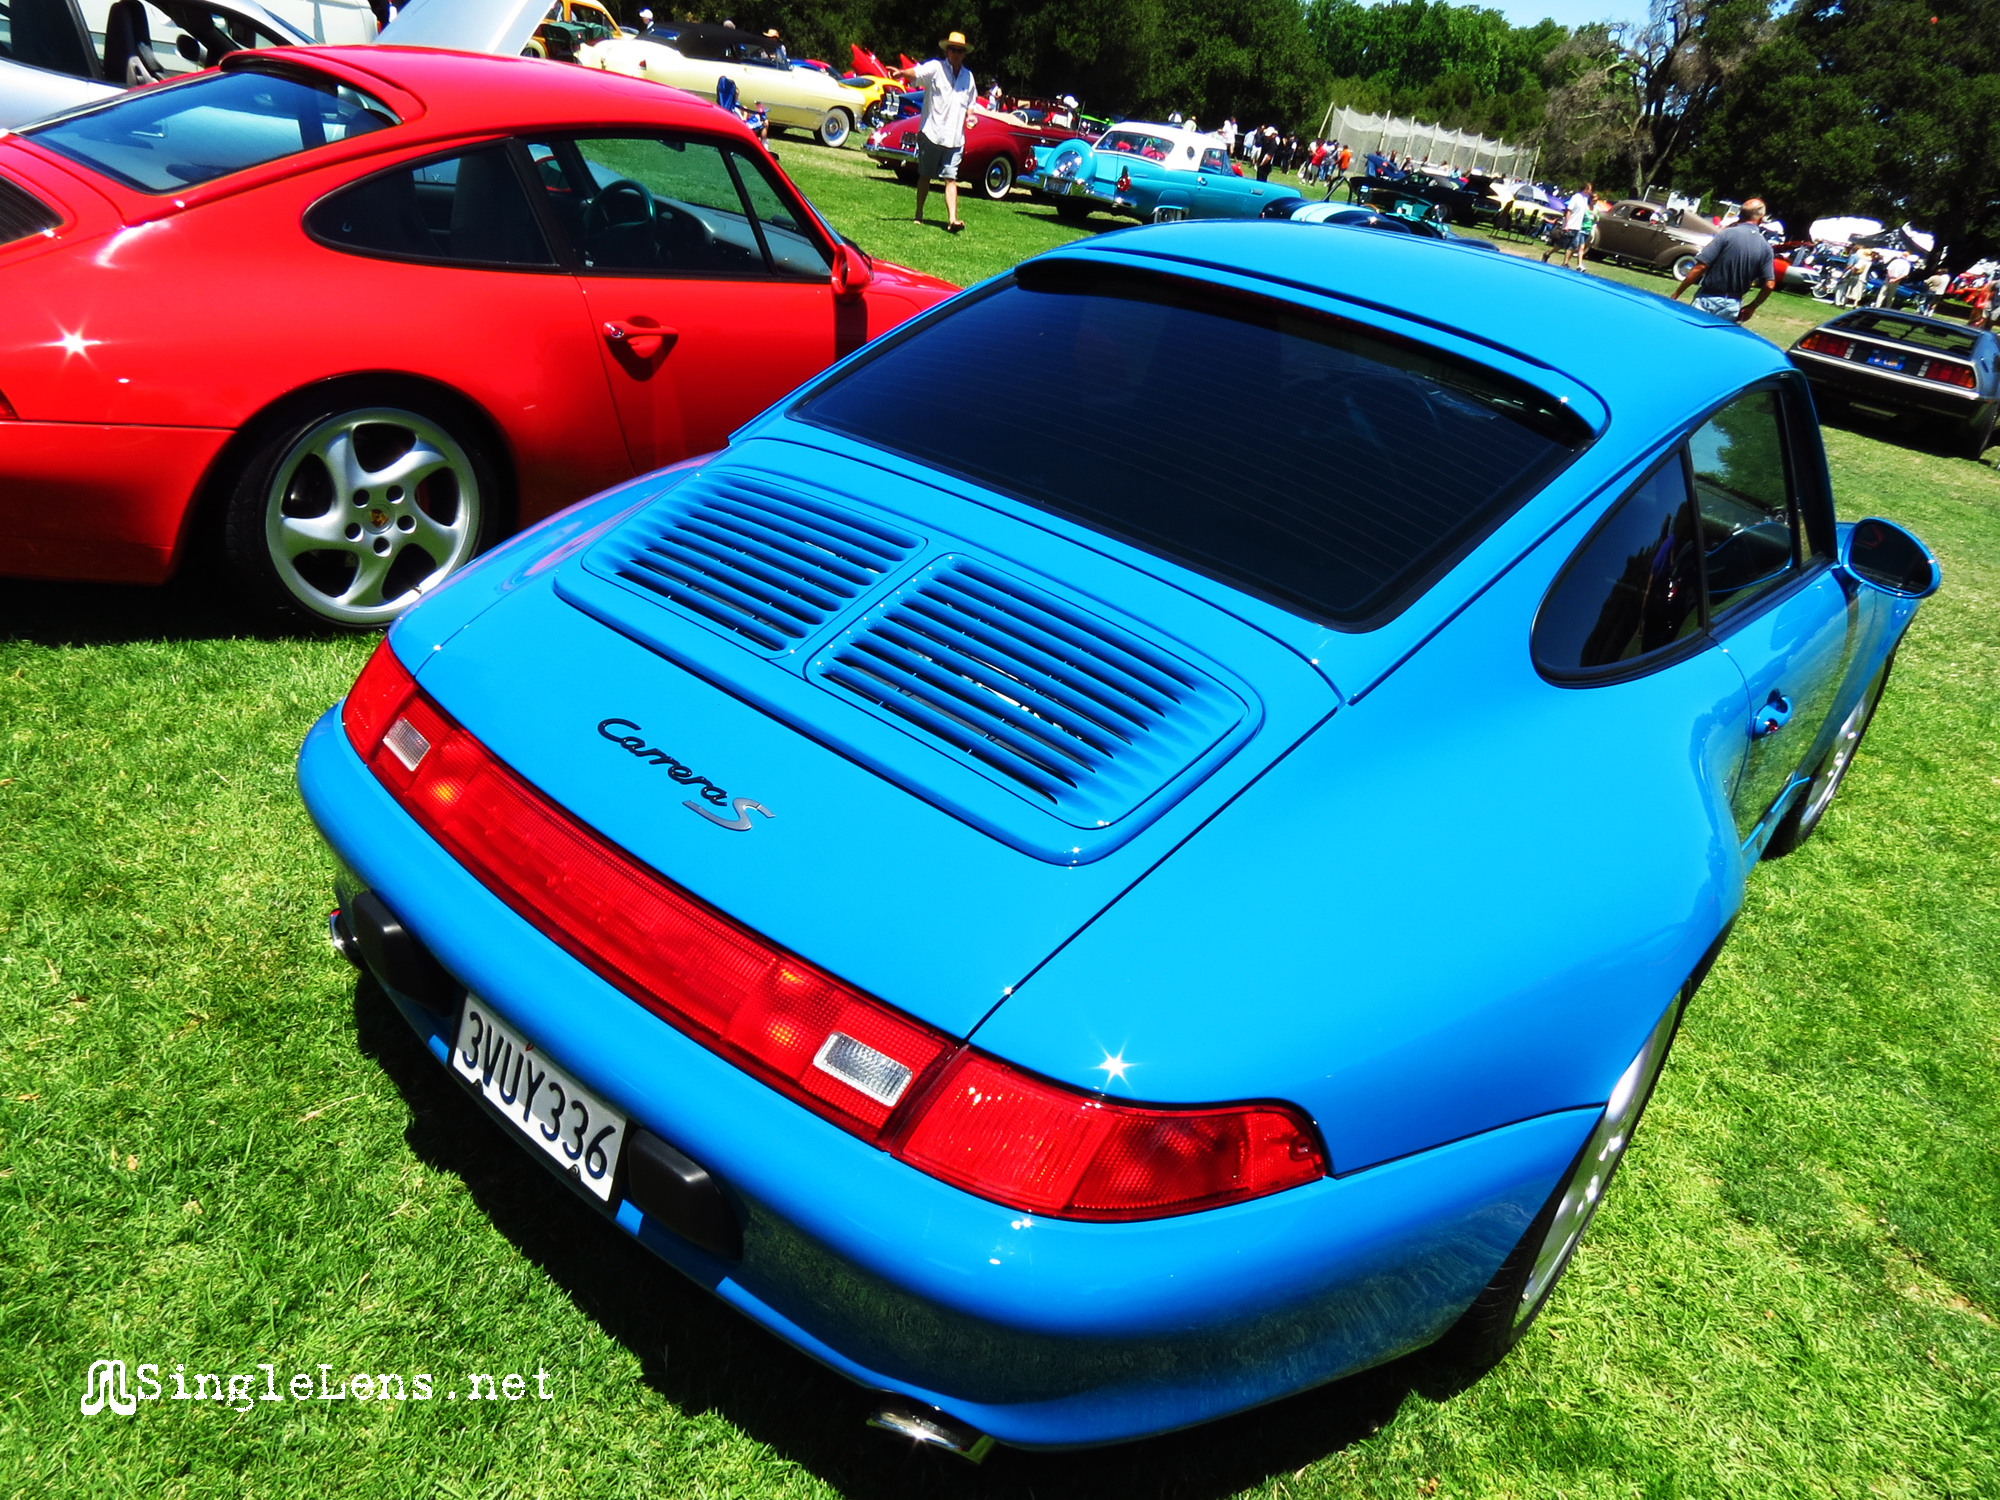 089_turquoise-blue-Porsche-Carrera-S.JPG